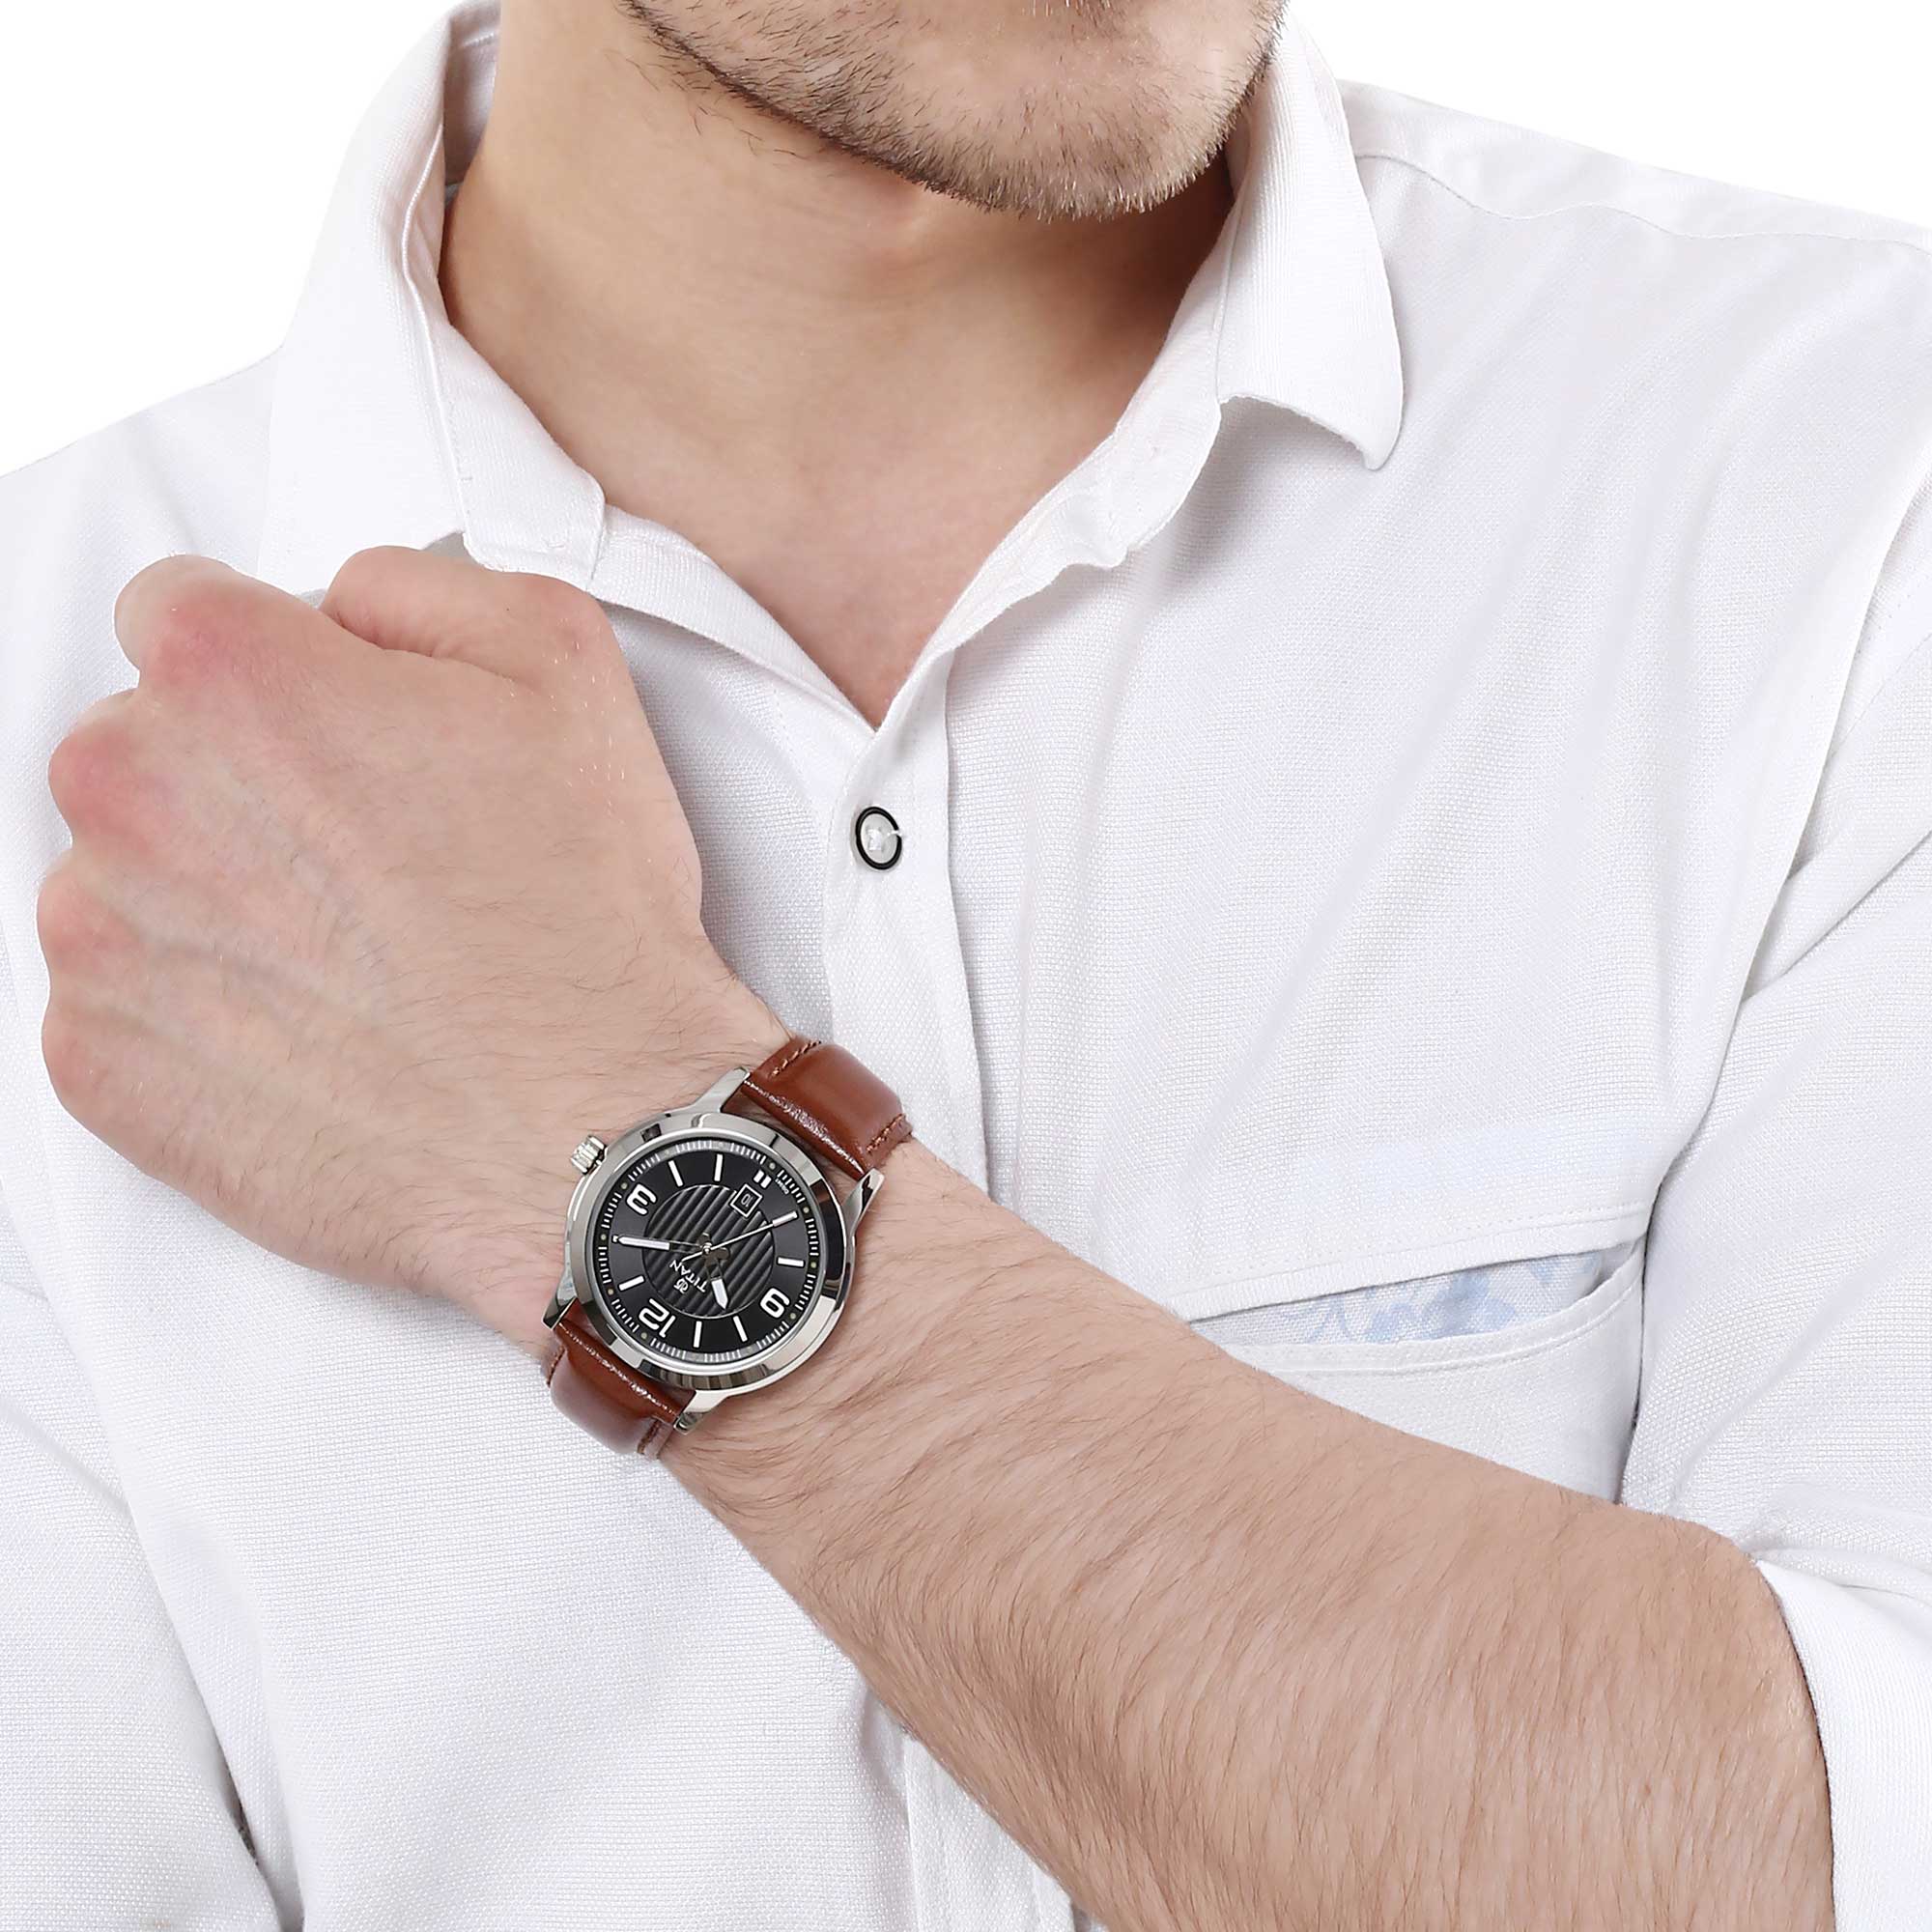 Titan Quartz Analog Black Dial Leather Strap Watch for Men